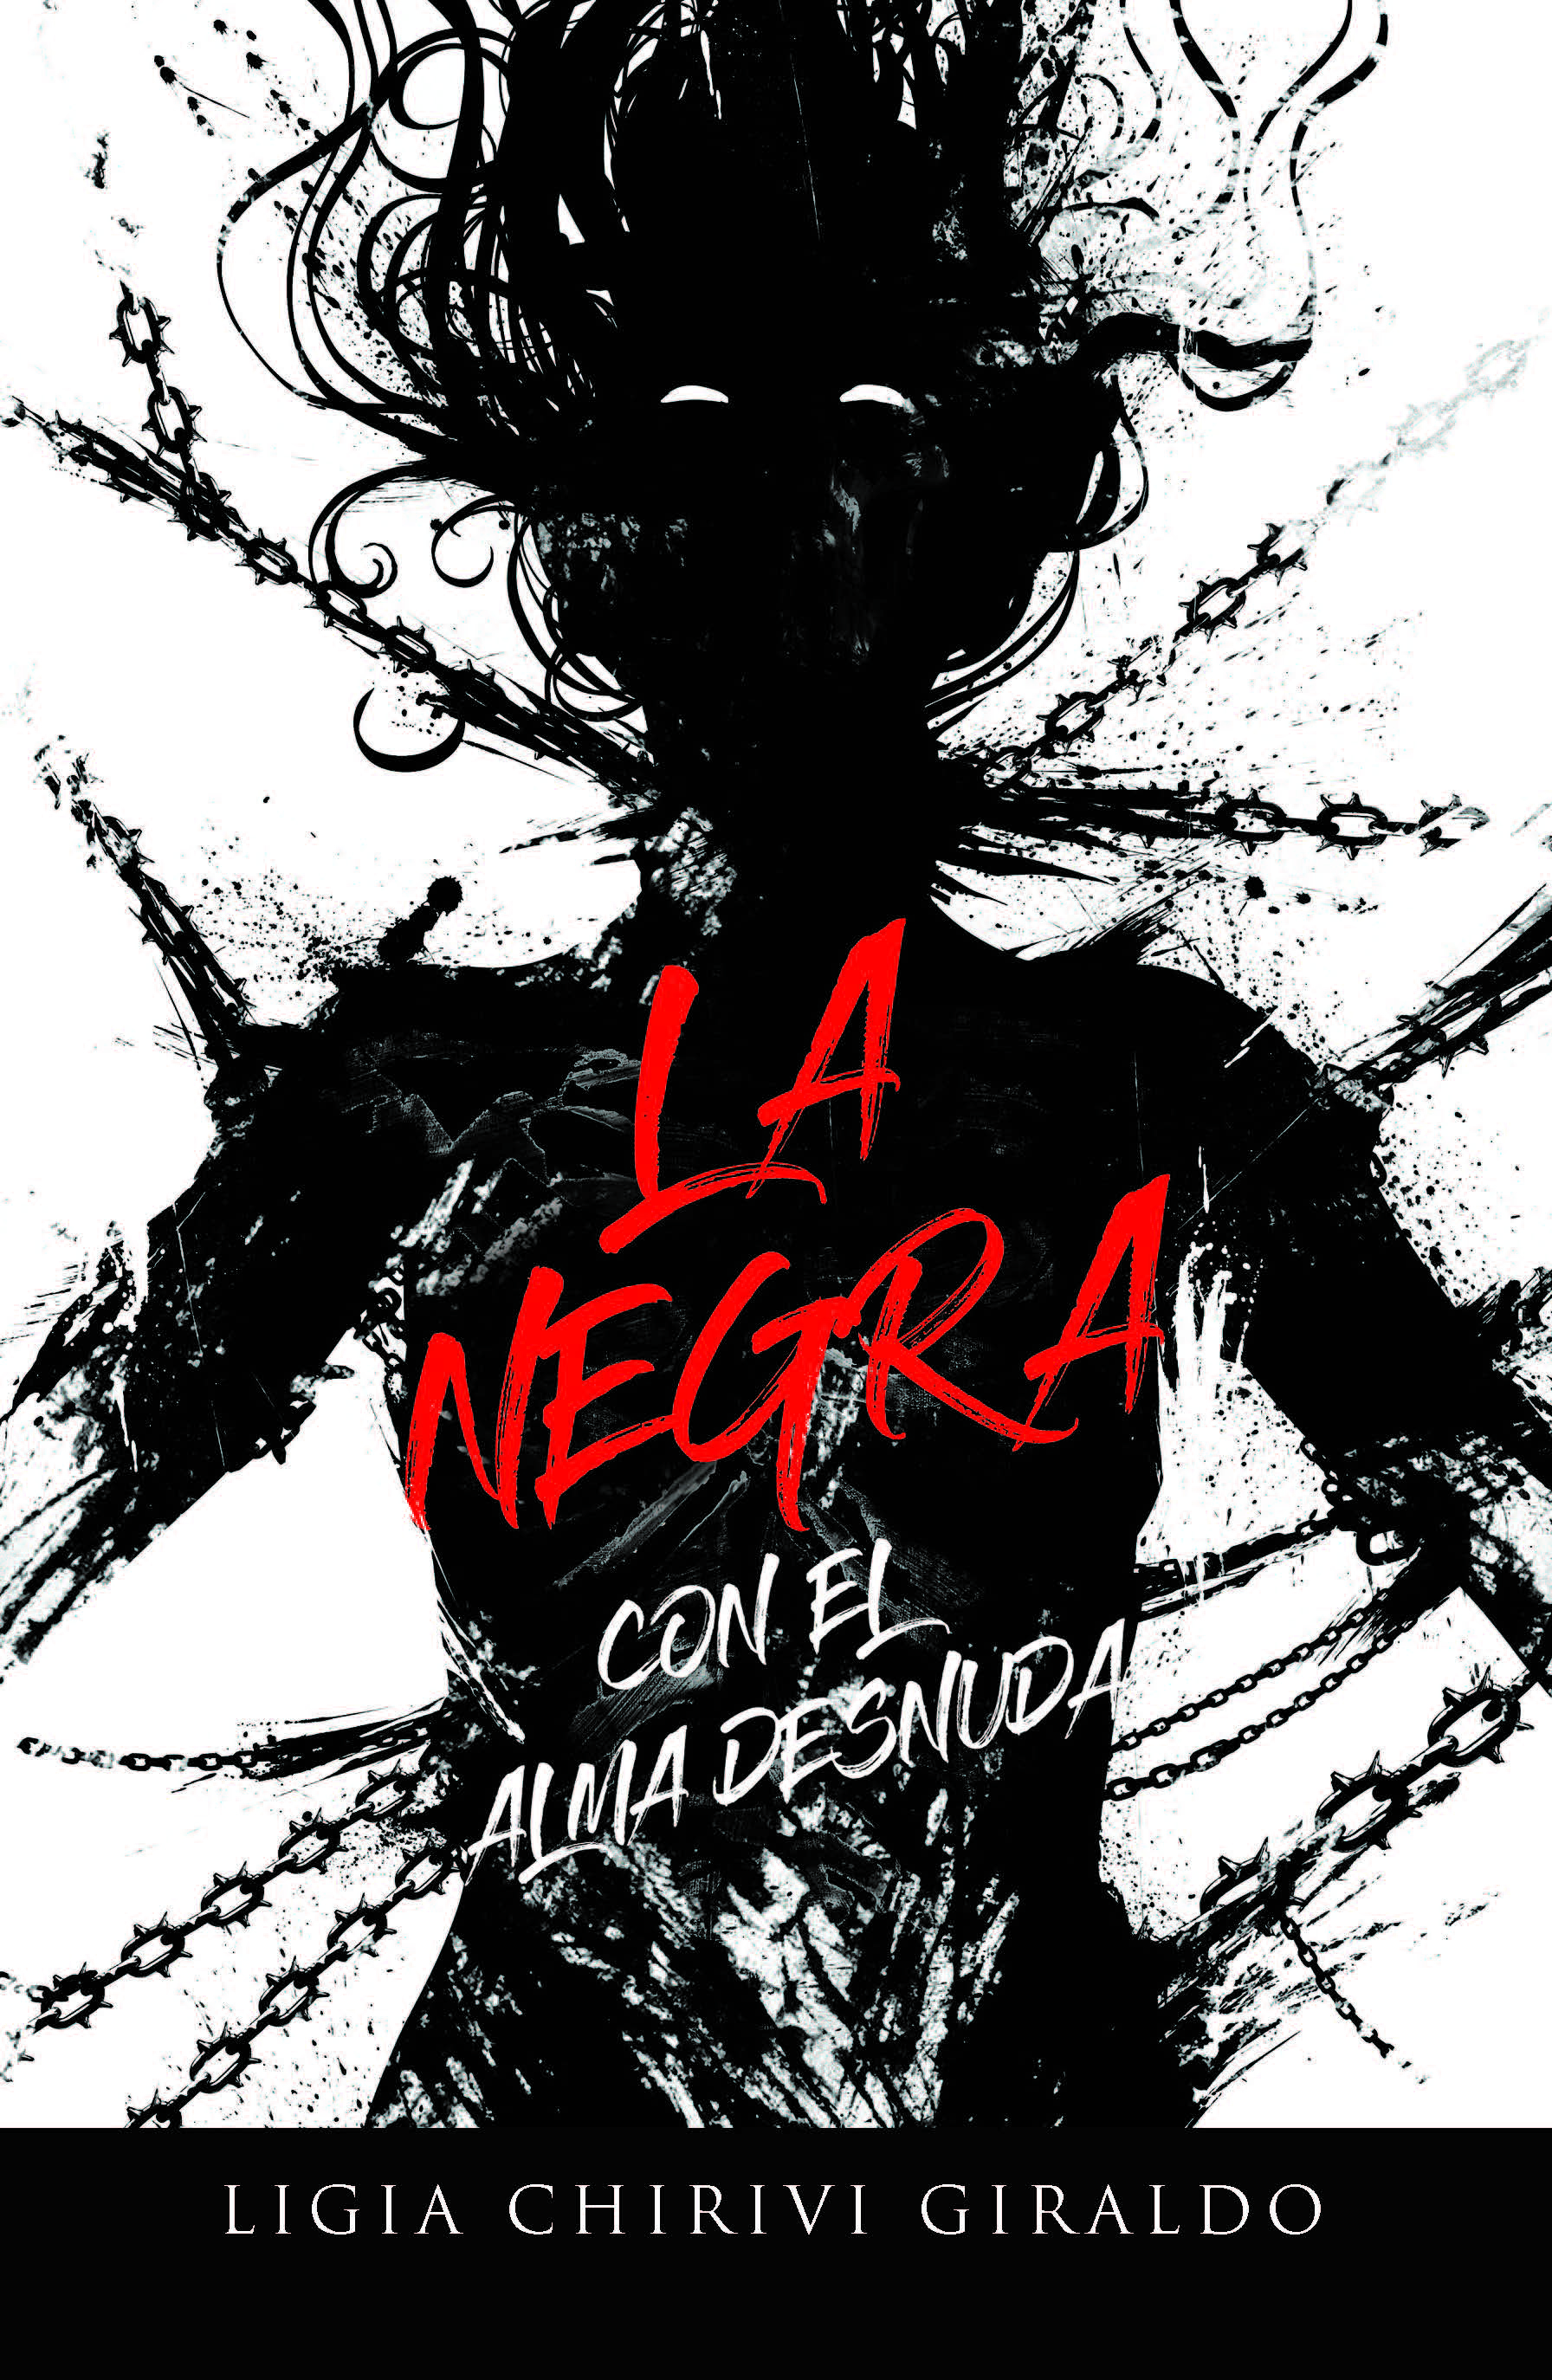 Ligia Chirivi Giraldo’s "La Negra" Reflects on a Life Filled with Hurdles and Inspiration